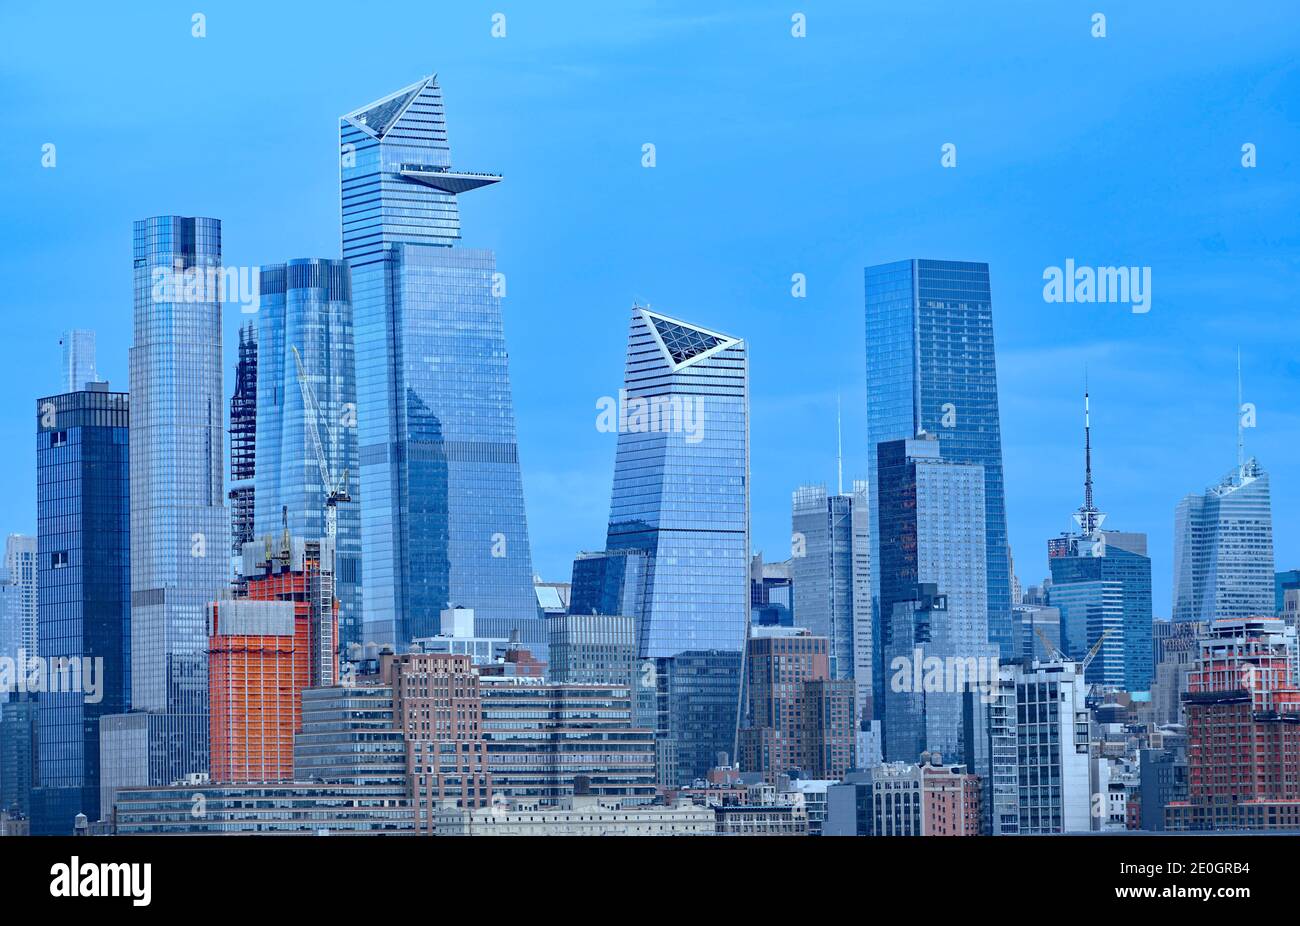 Manhattan midtown skyline in December 2020, seen from across the Hudson River Stock Photo